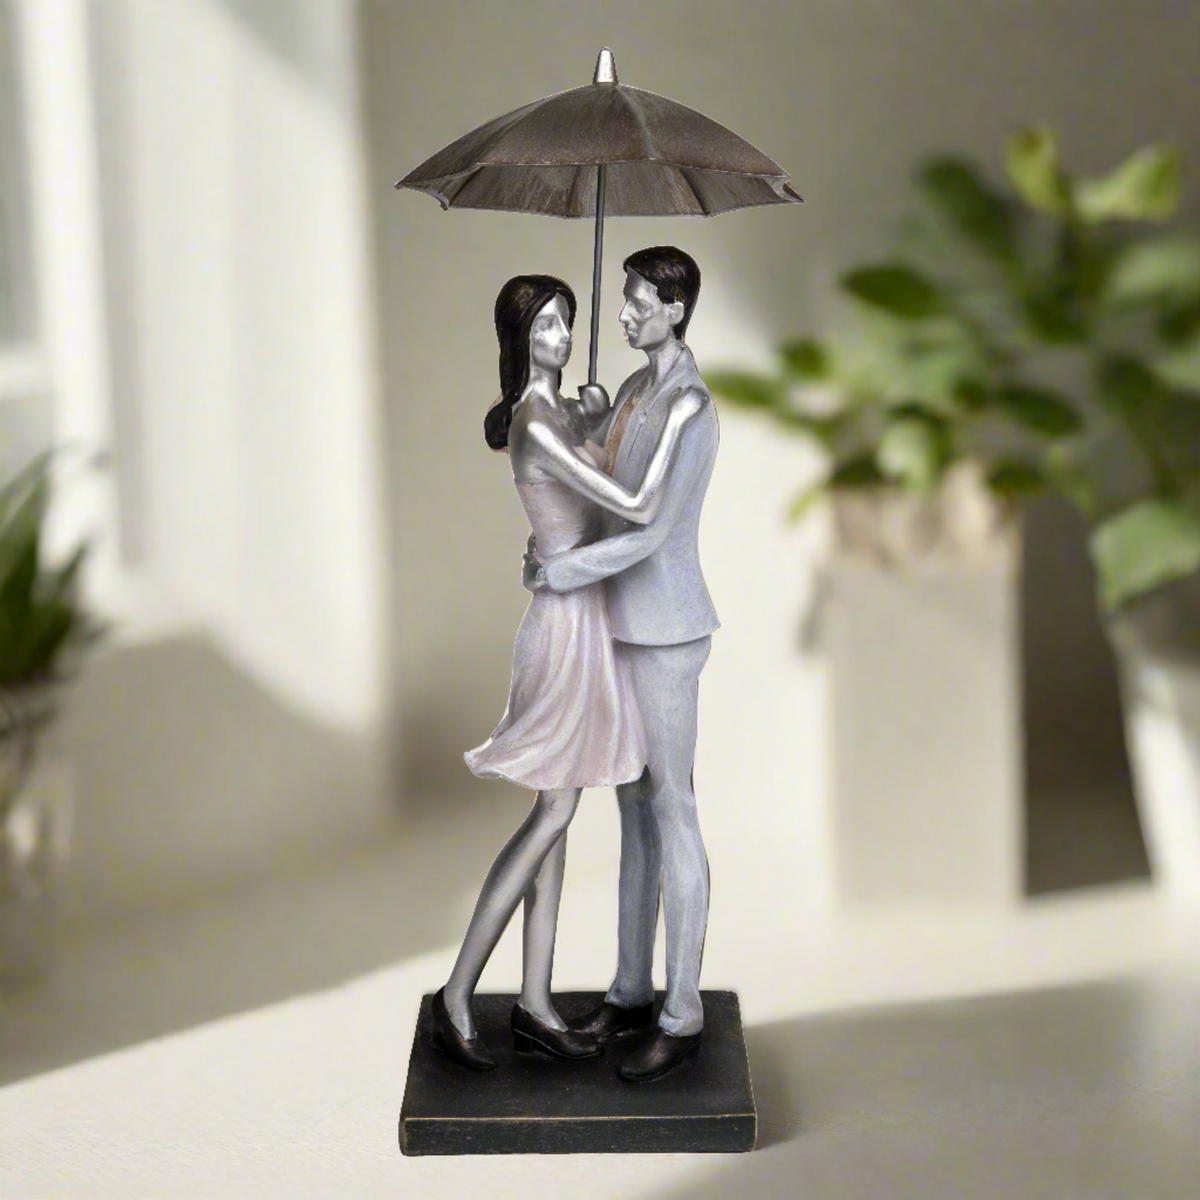 Couple in Loving Embrace with Umbrella 38cm Figurine